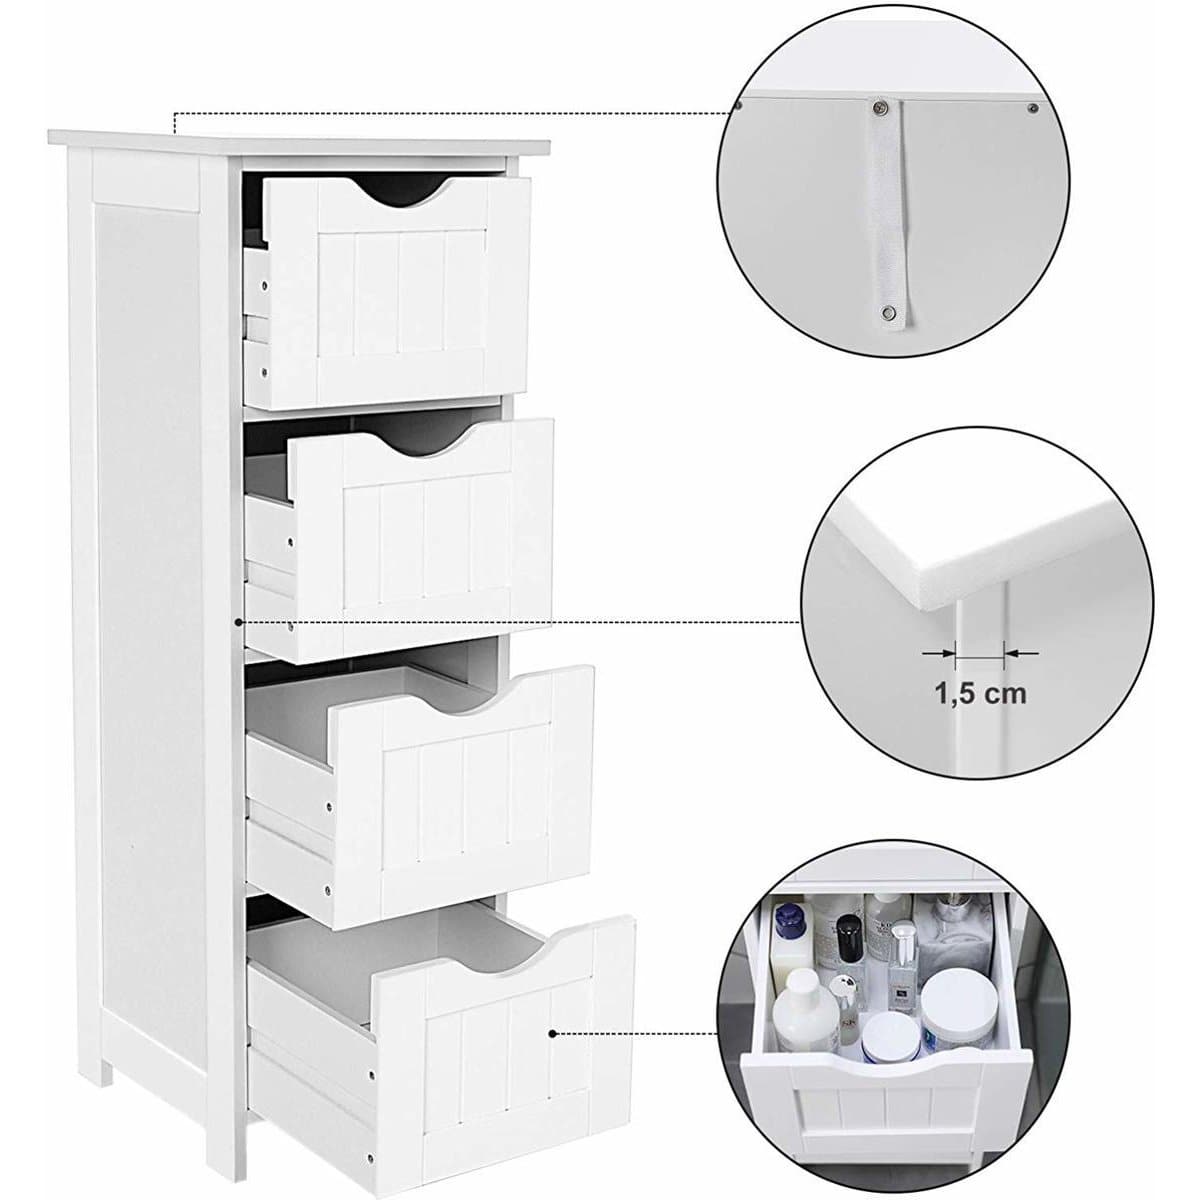 Nancy's Bathroom Furniture - Narrow Cabinet - Freestanding Bathroom Furniture - Bathroom Cabinet - Chest of Drawers - White